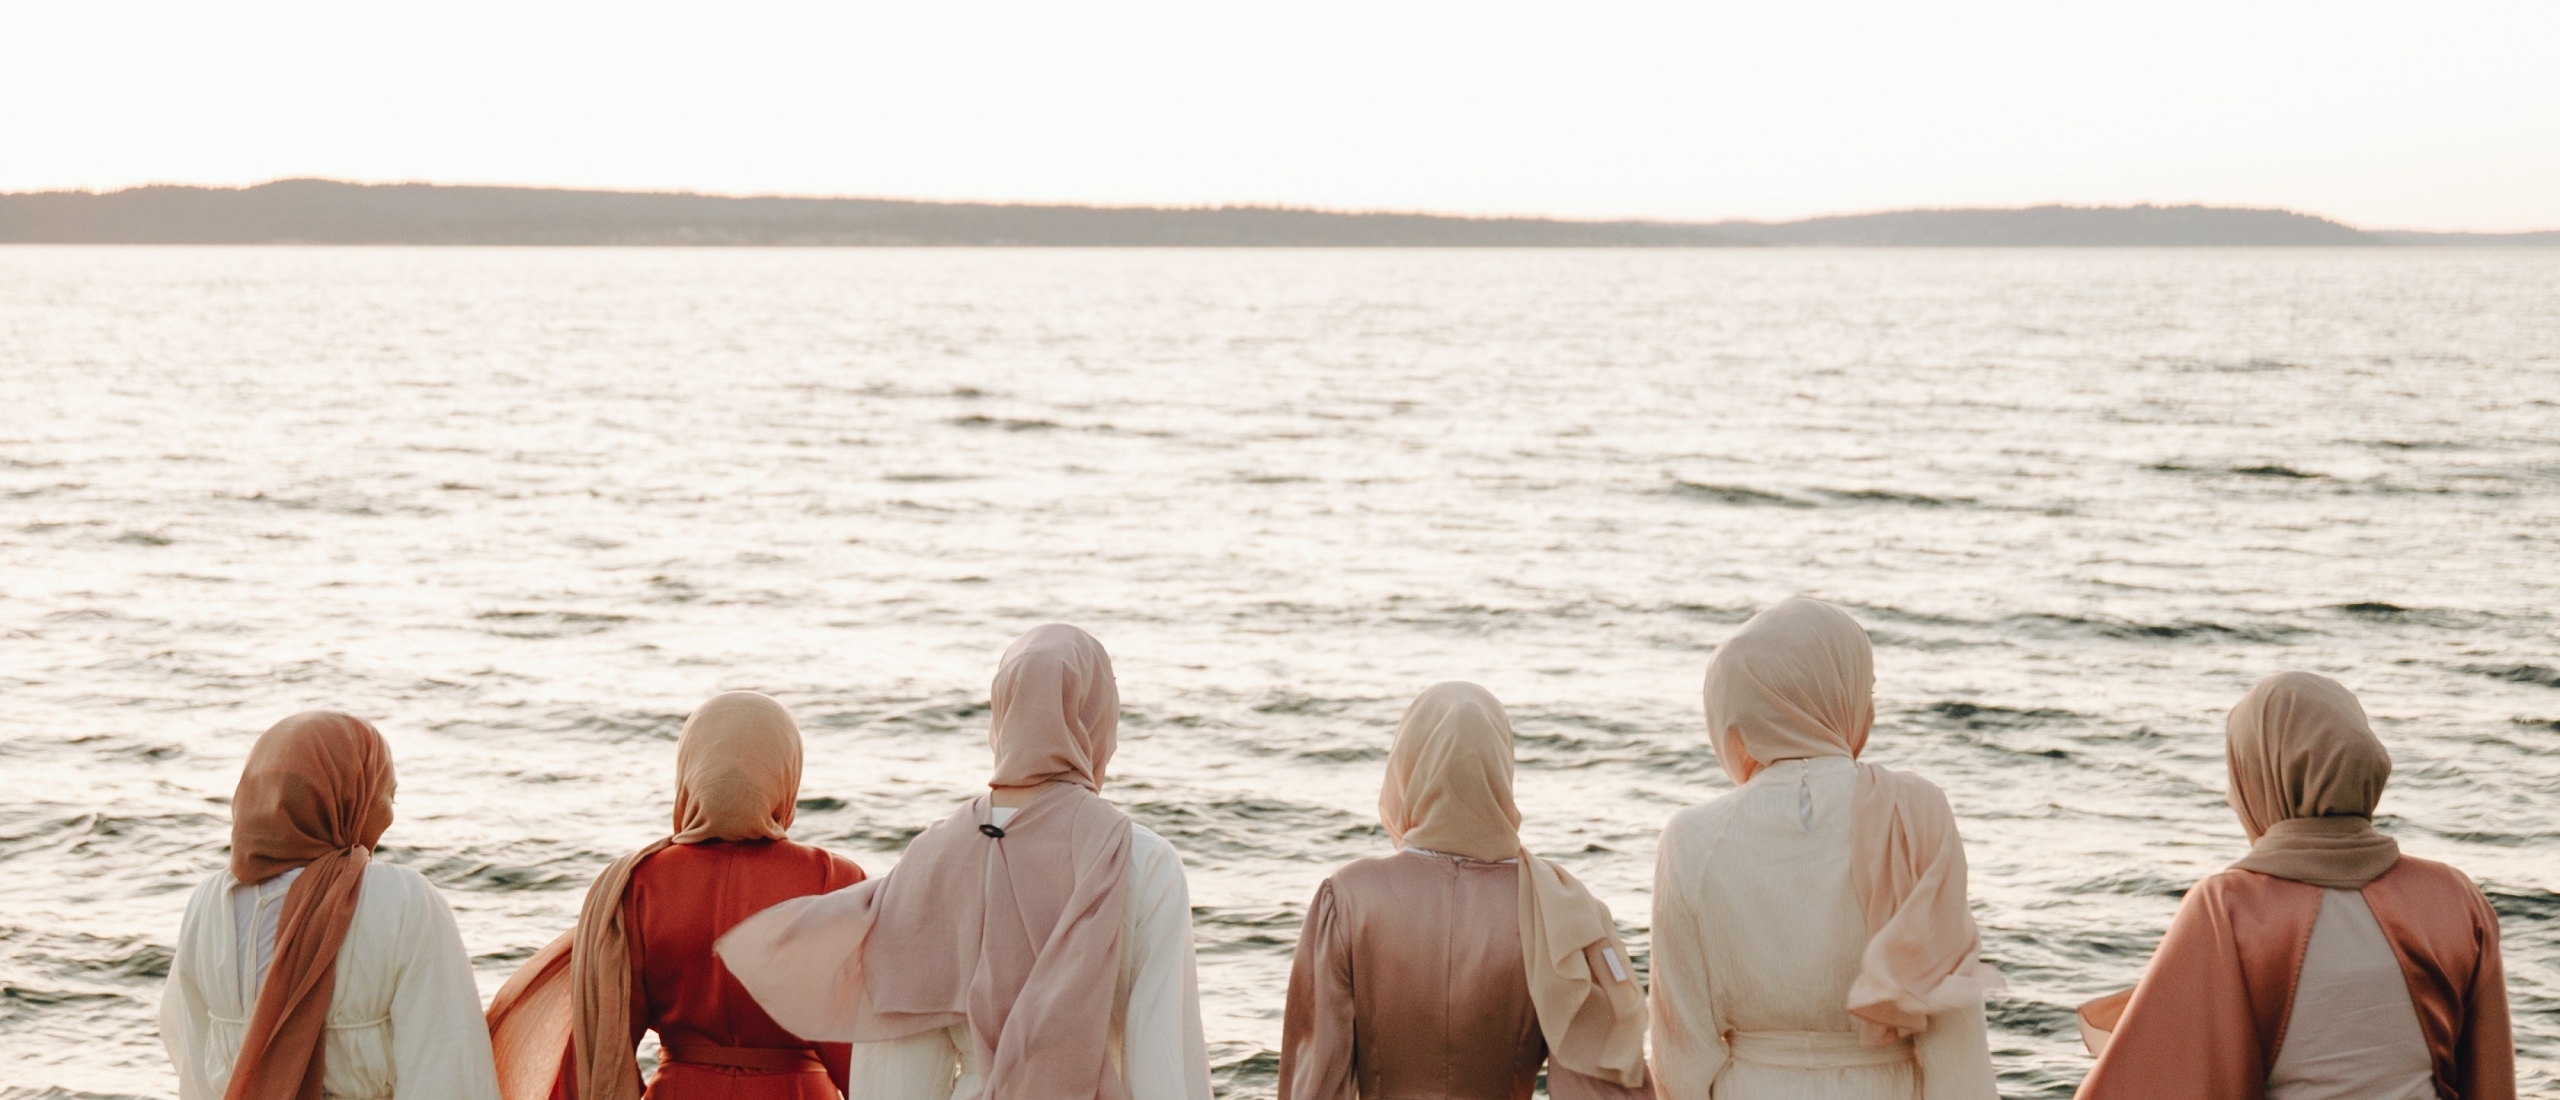 beste-halal-reizen-strand-vrouwen